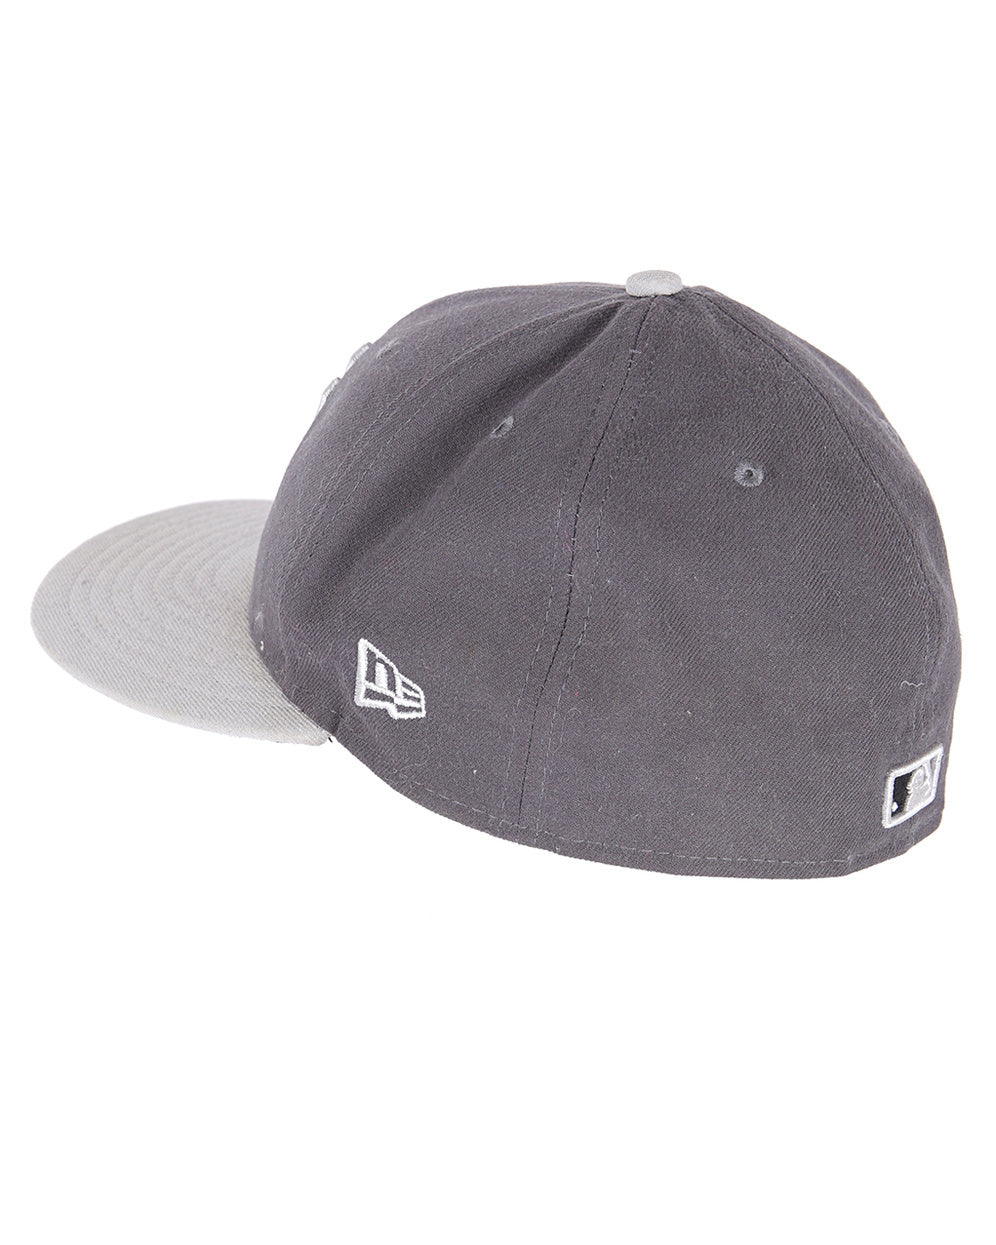 MLB New York Yankees x New Era Baseball Snap Back Hat - Size 7.5